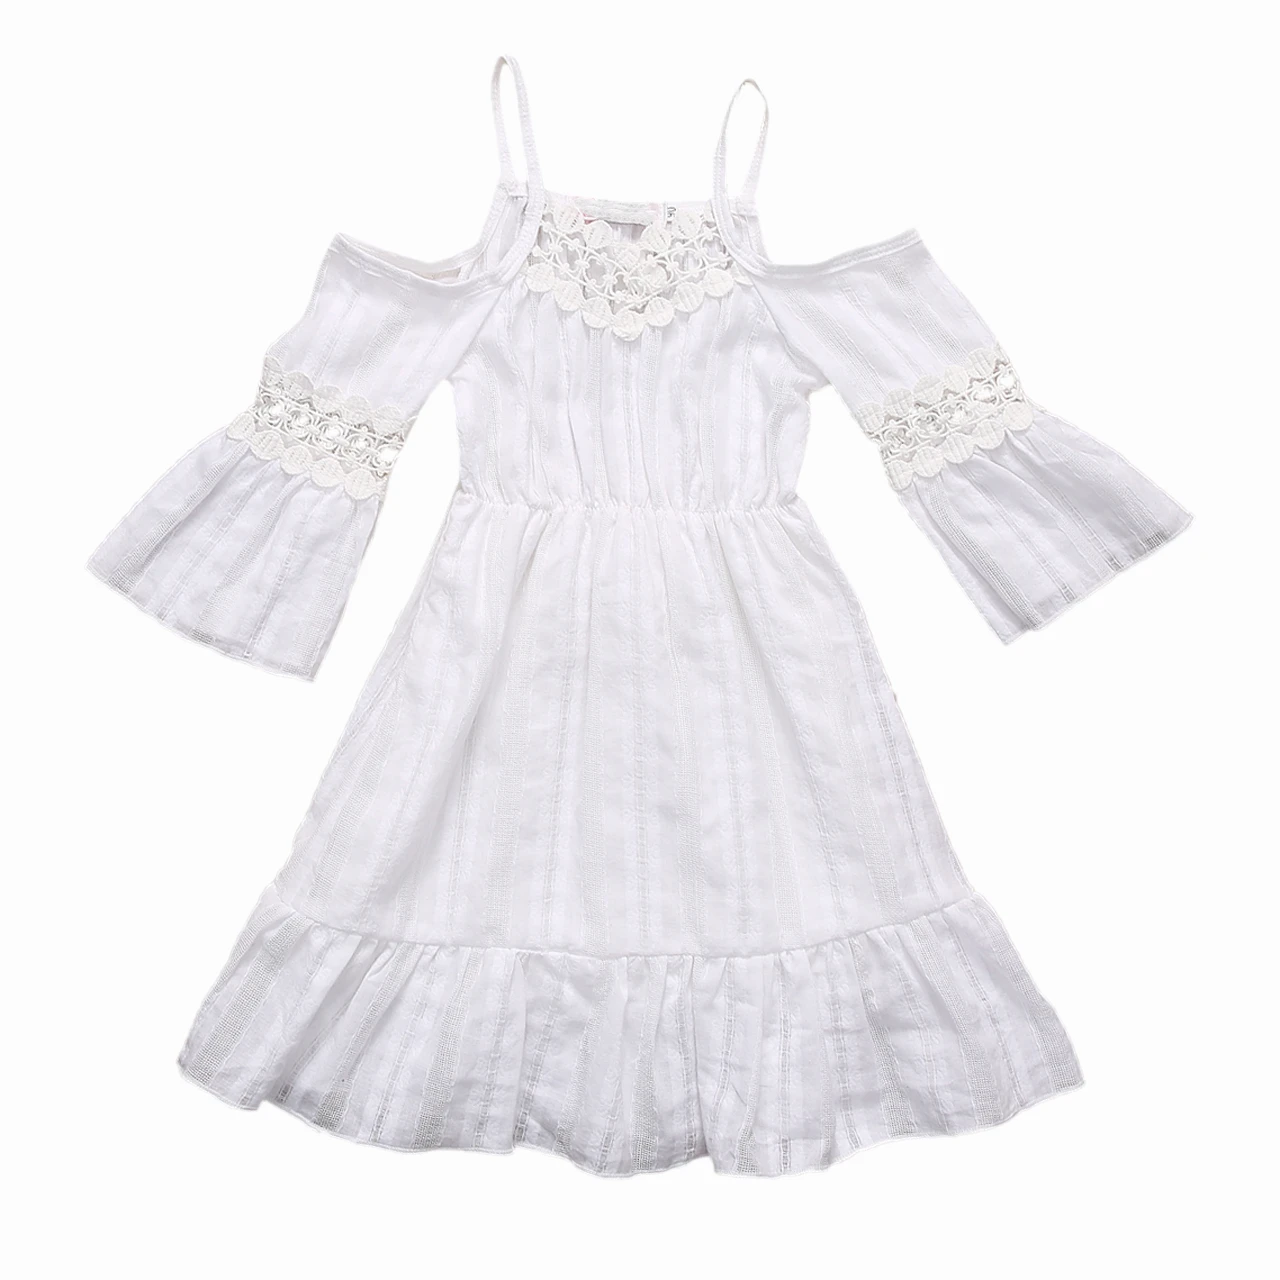 cute white dresses for kids